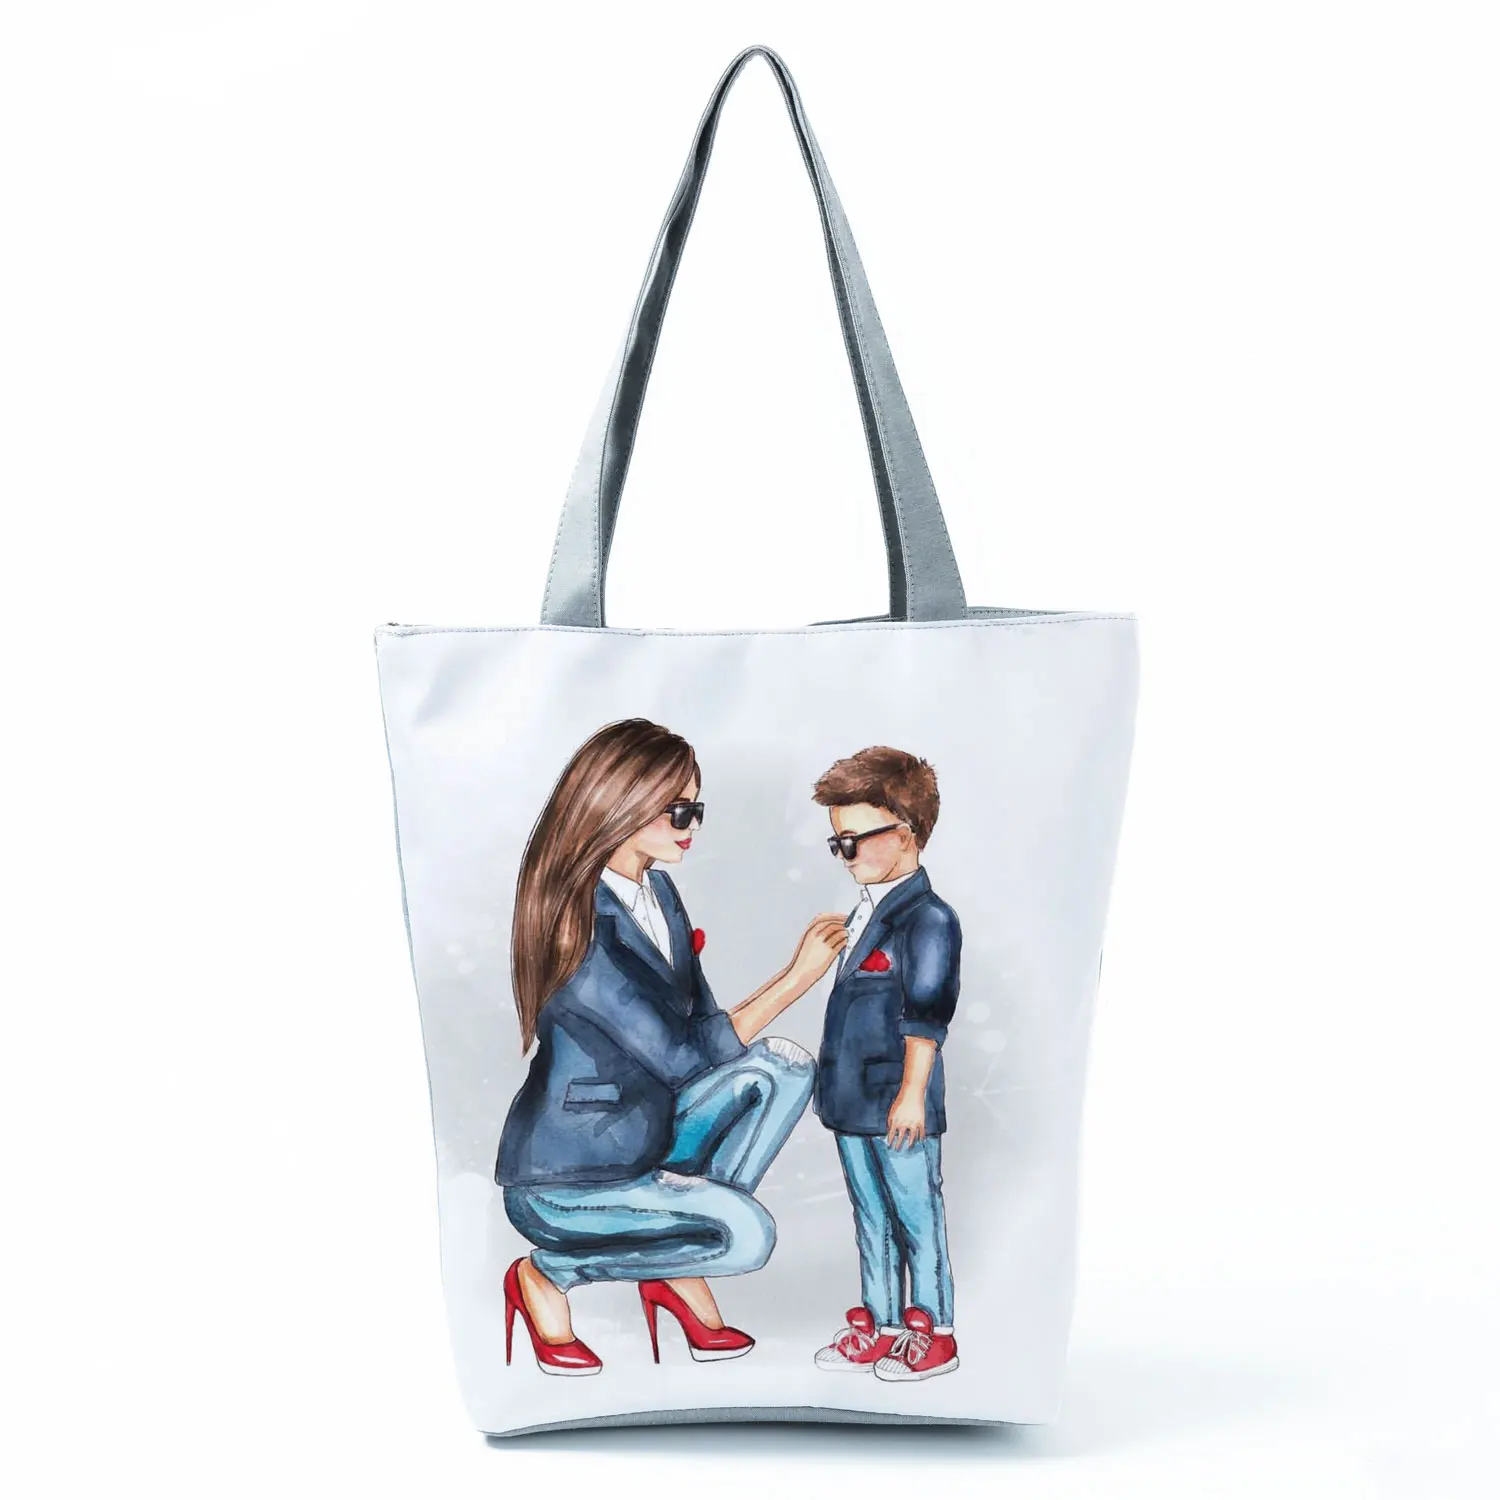 Cute Cartoon Super Mama Print Tote Bag Reusable Shoulder Bags Mom and Baby Folding Women Casual Handbags Portable Shopping Bag wristlet bag Totes